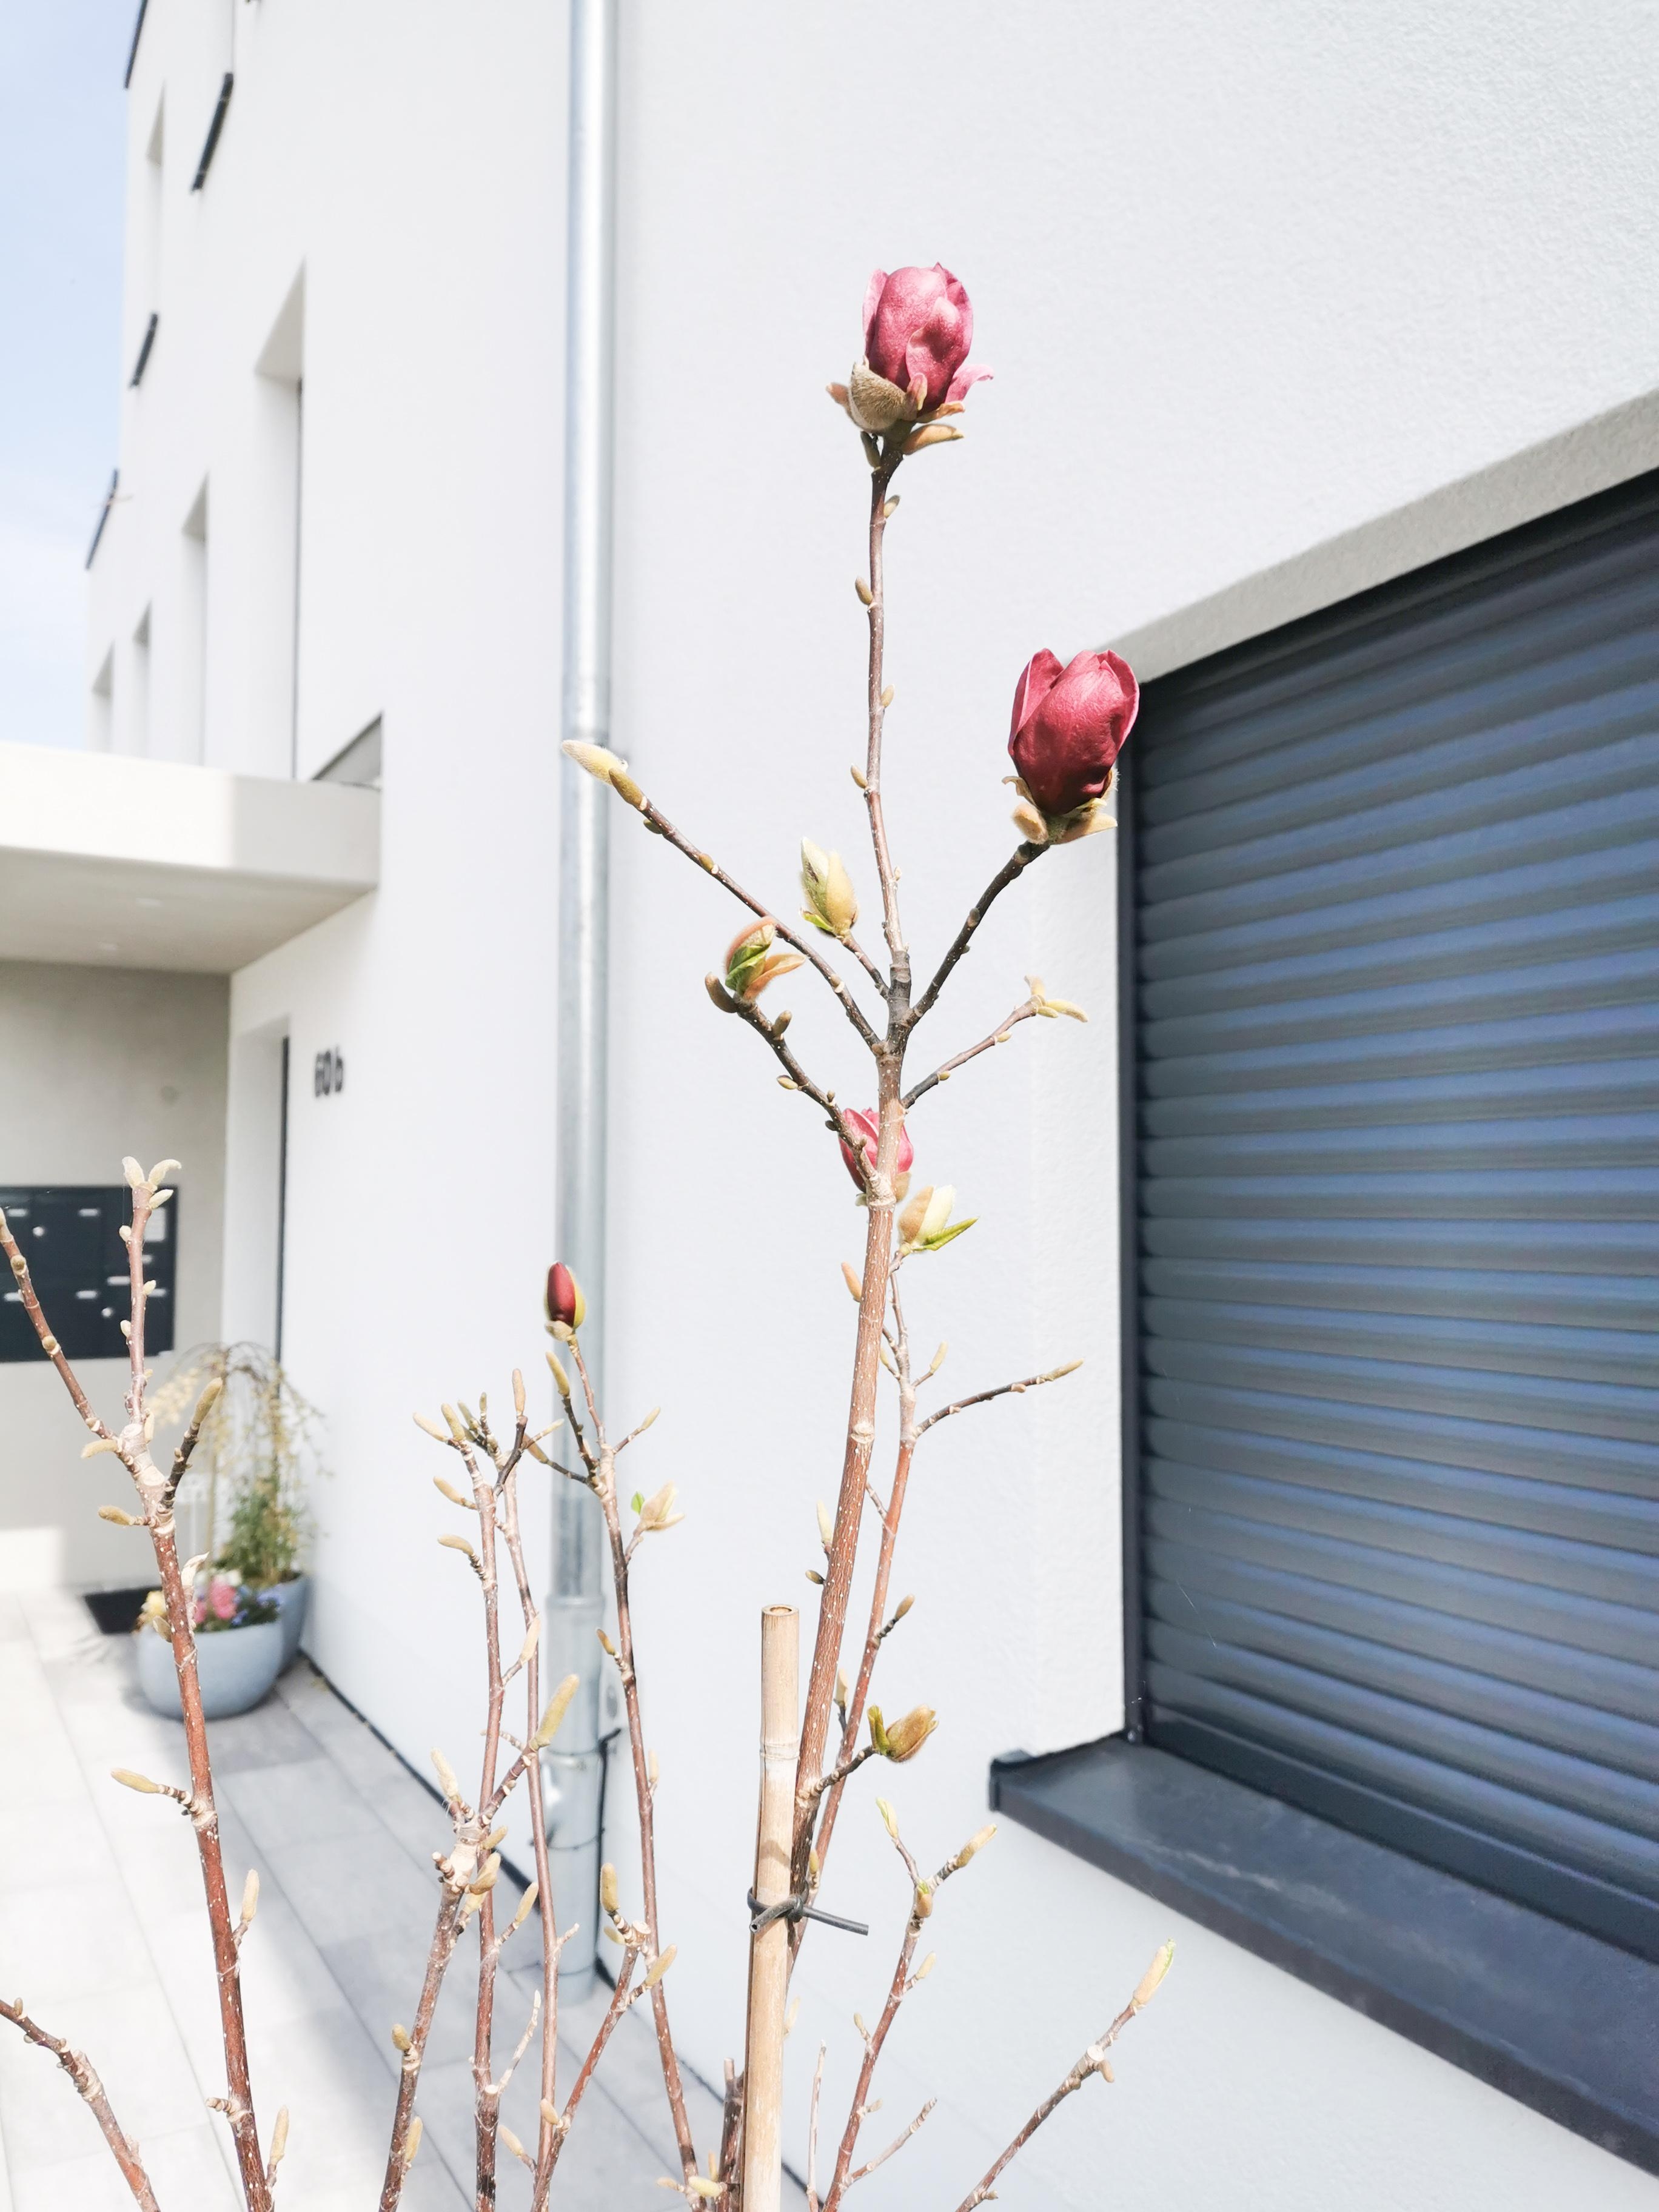 Hallo Frühling!
#Frühling#Magnolie#Hausbau#Außenanlagen#Springtime 